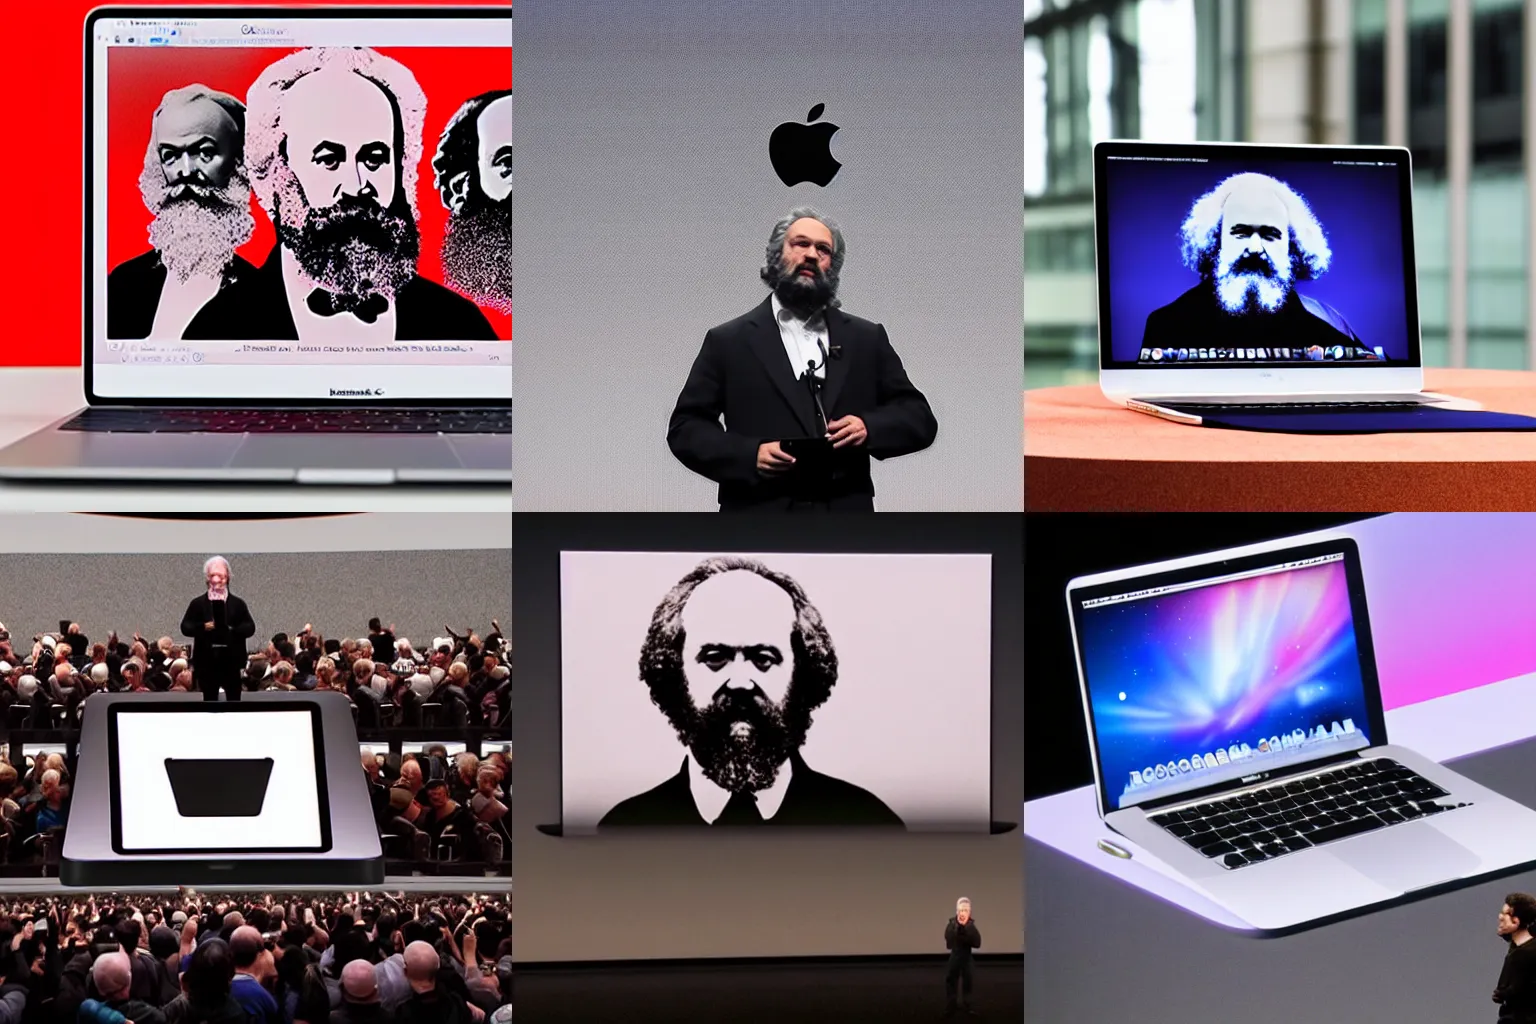 Prompt: Karl Marx presents new macbook at wwdc